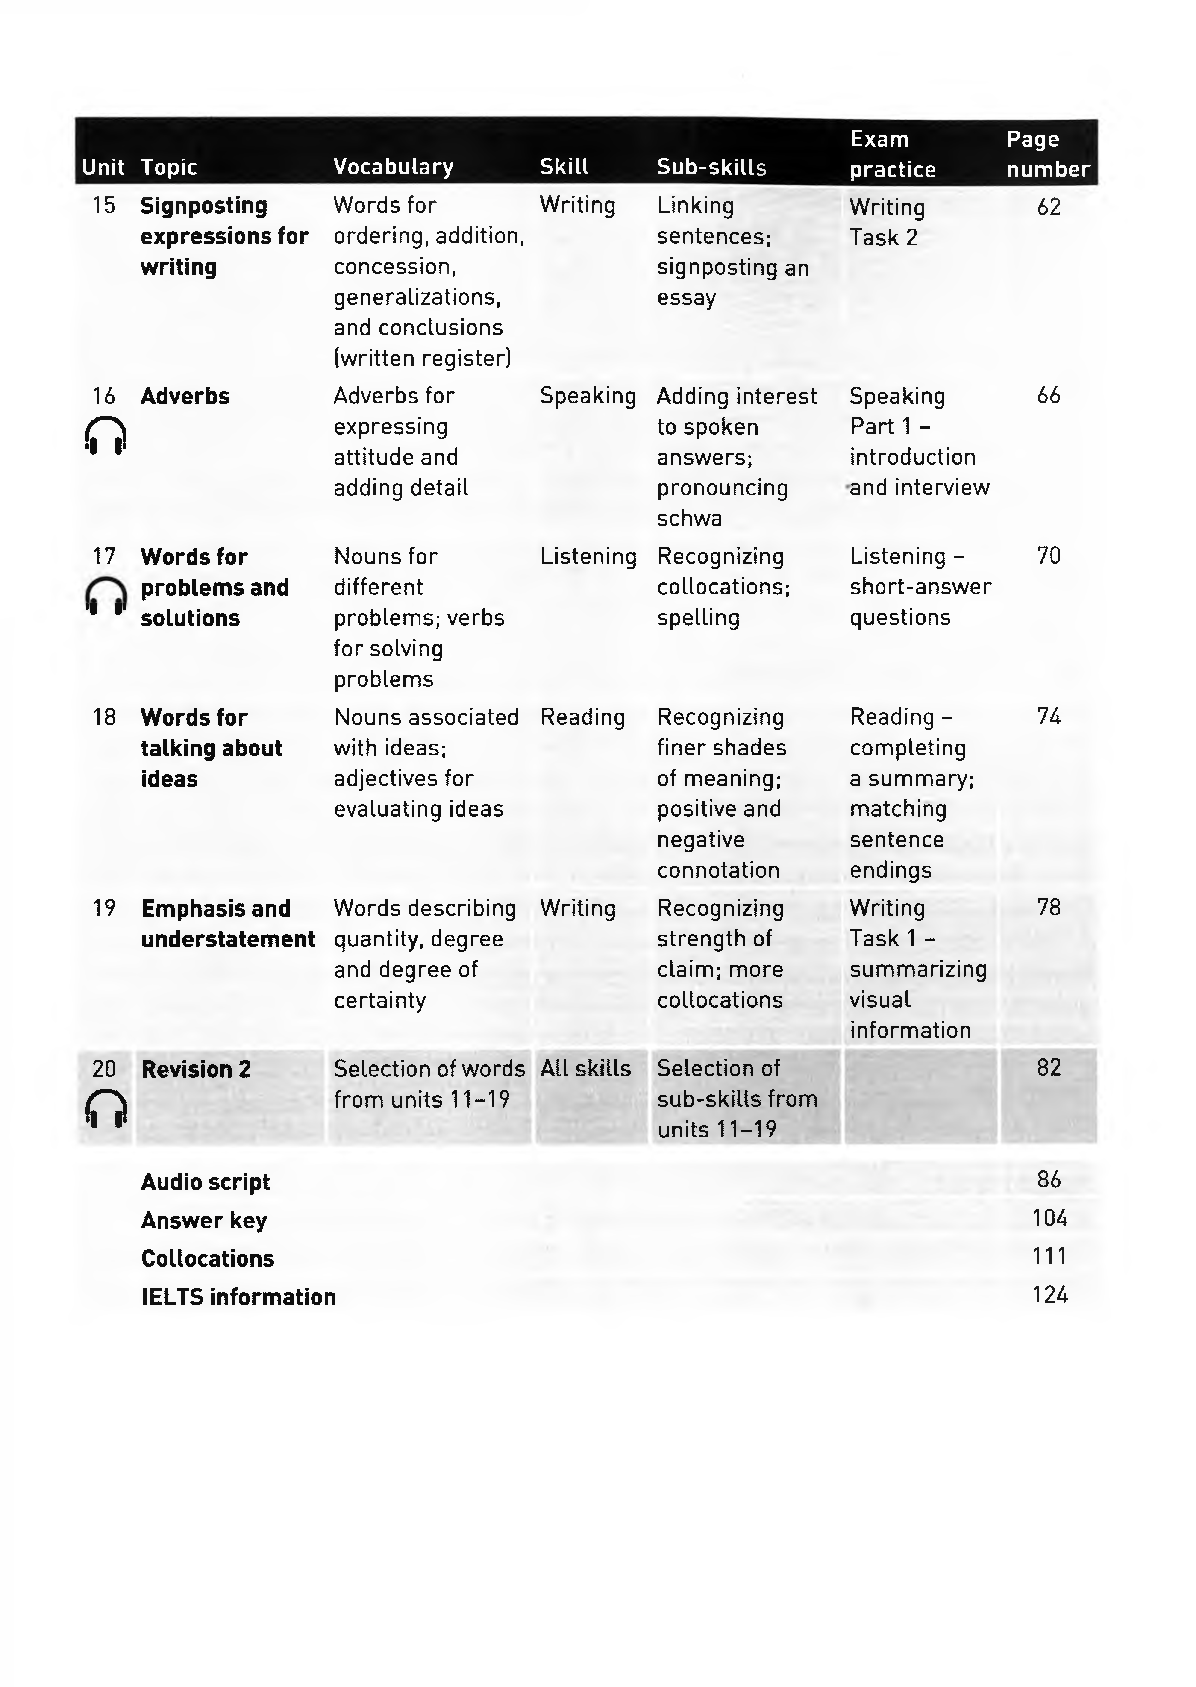 Sách Collins Vocabulary for IELTS pdf | Xem online, tải PDF miễn phí (trang 4)